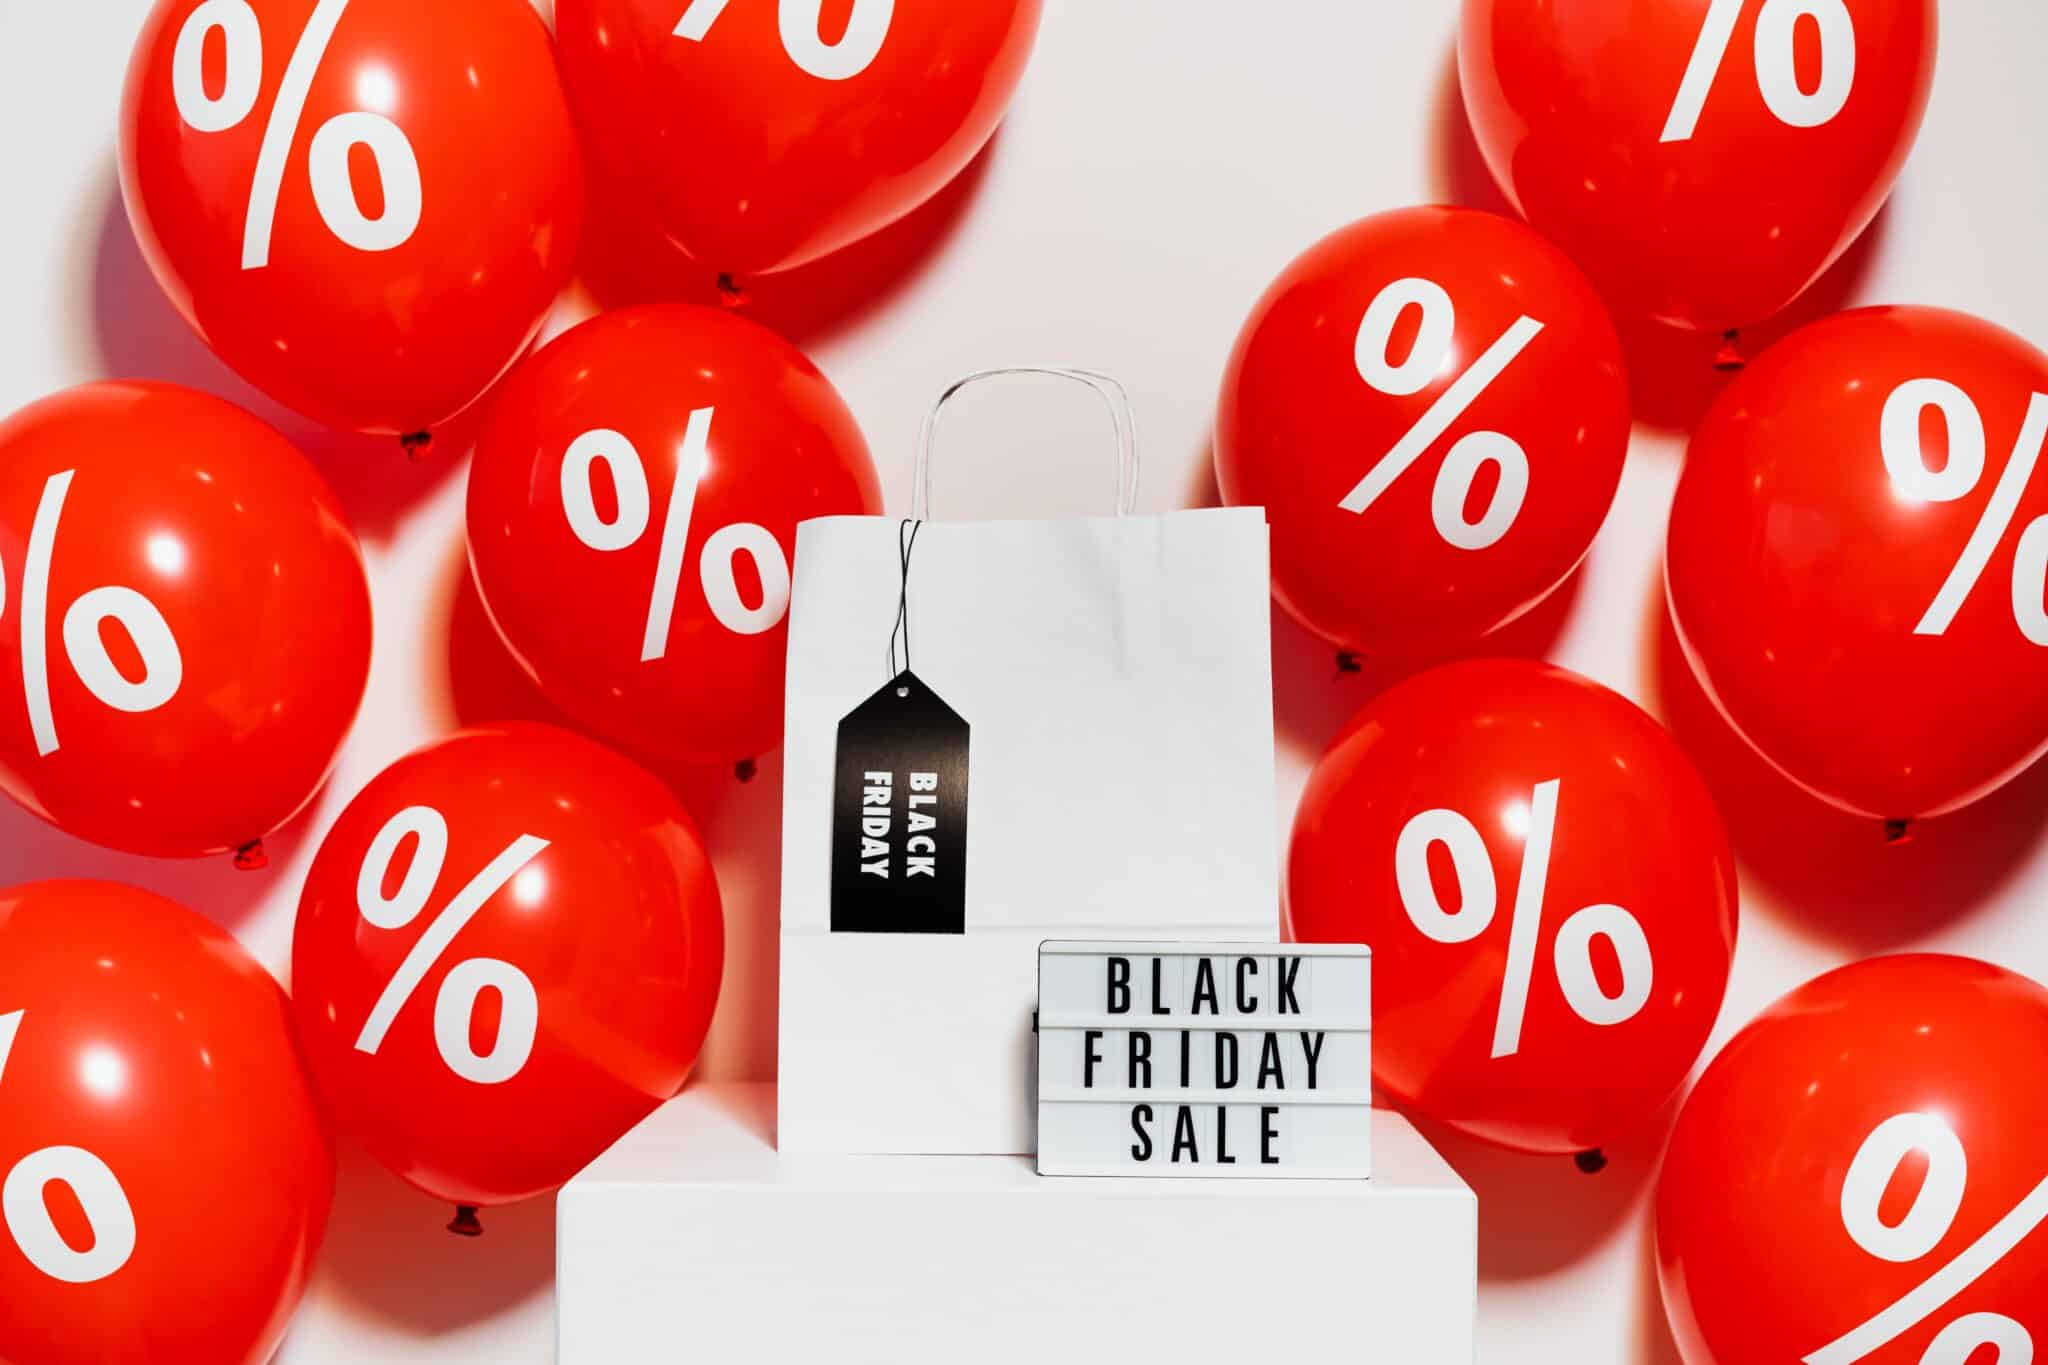 Smart Black Friday Shopping: Maximize Savings, Minimize Debt